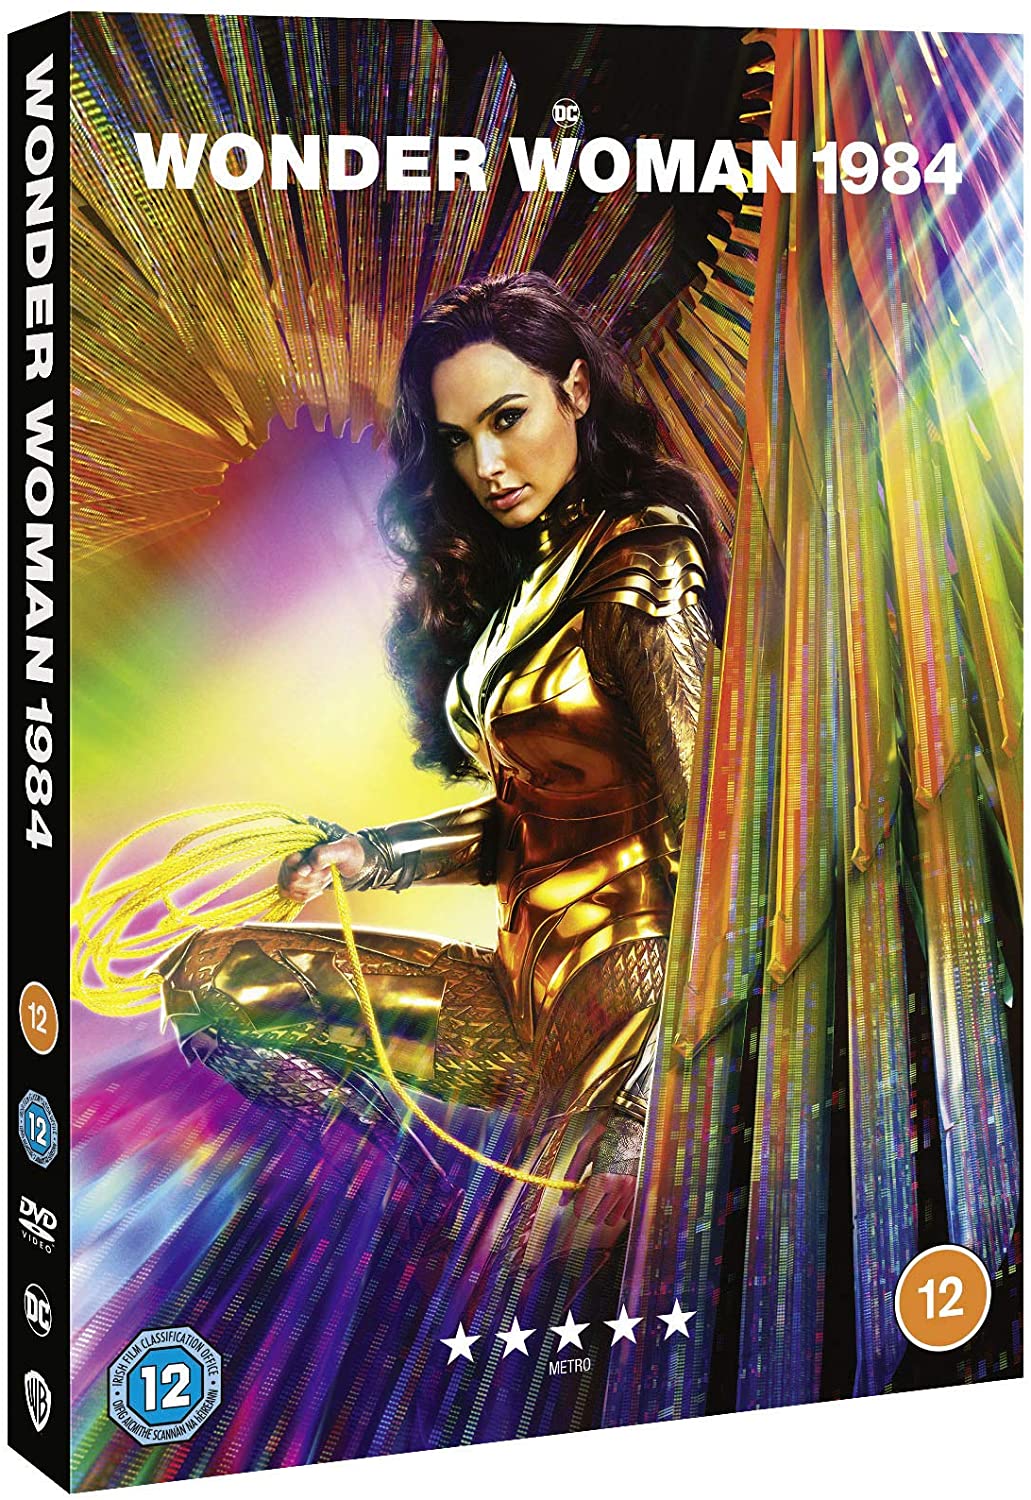 Wonder Woman 1984 [2020] - Action/Adventure [DVD]